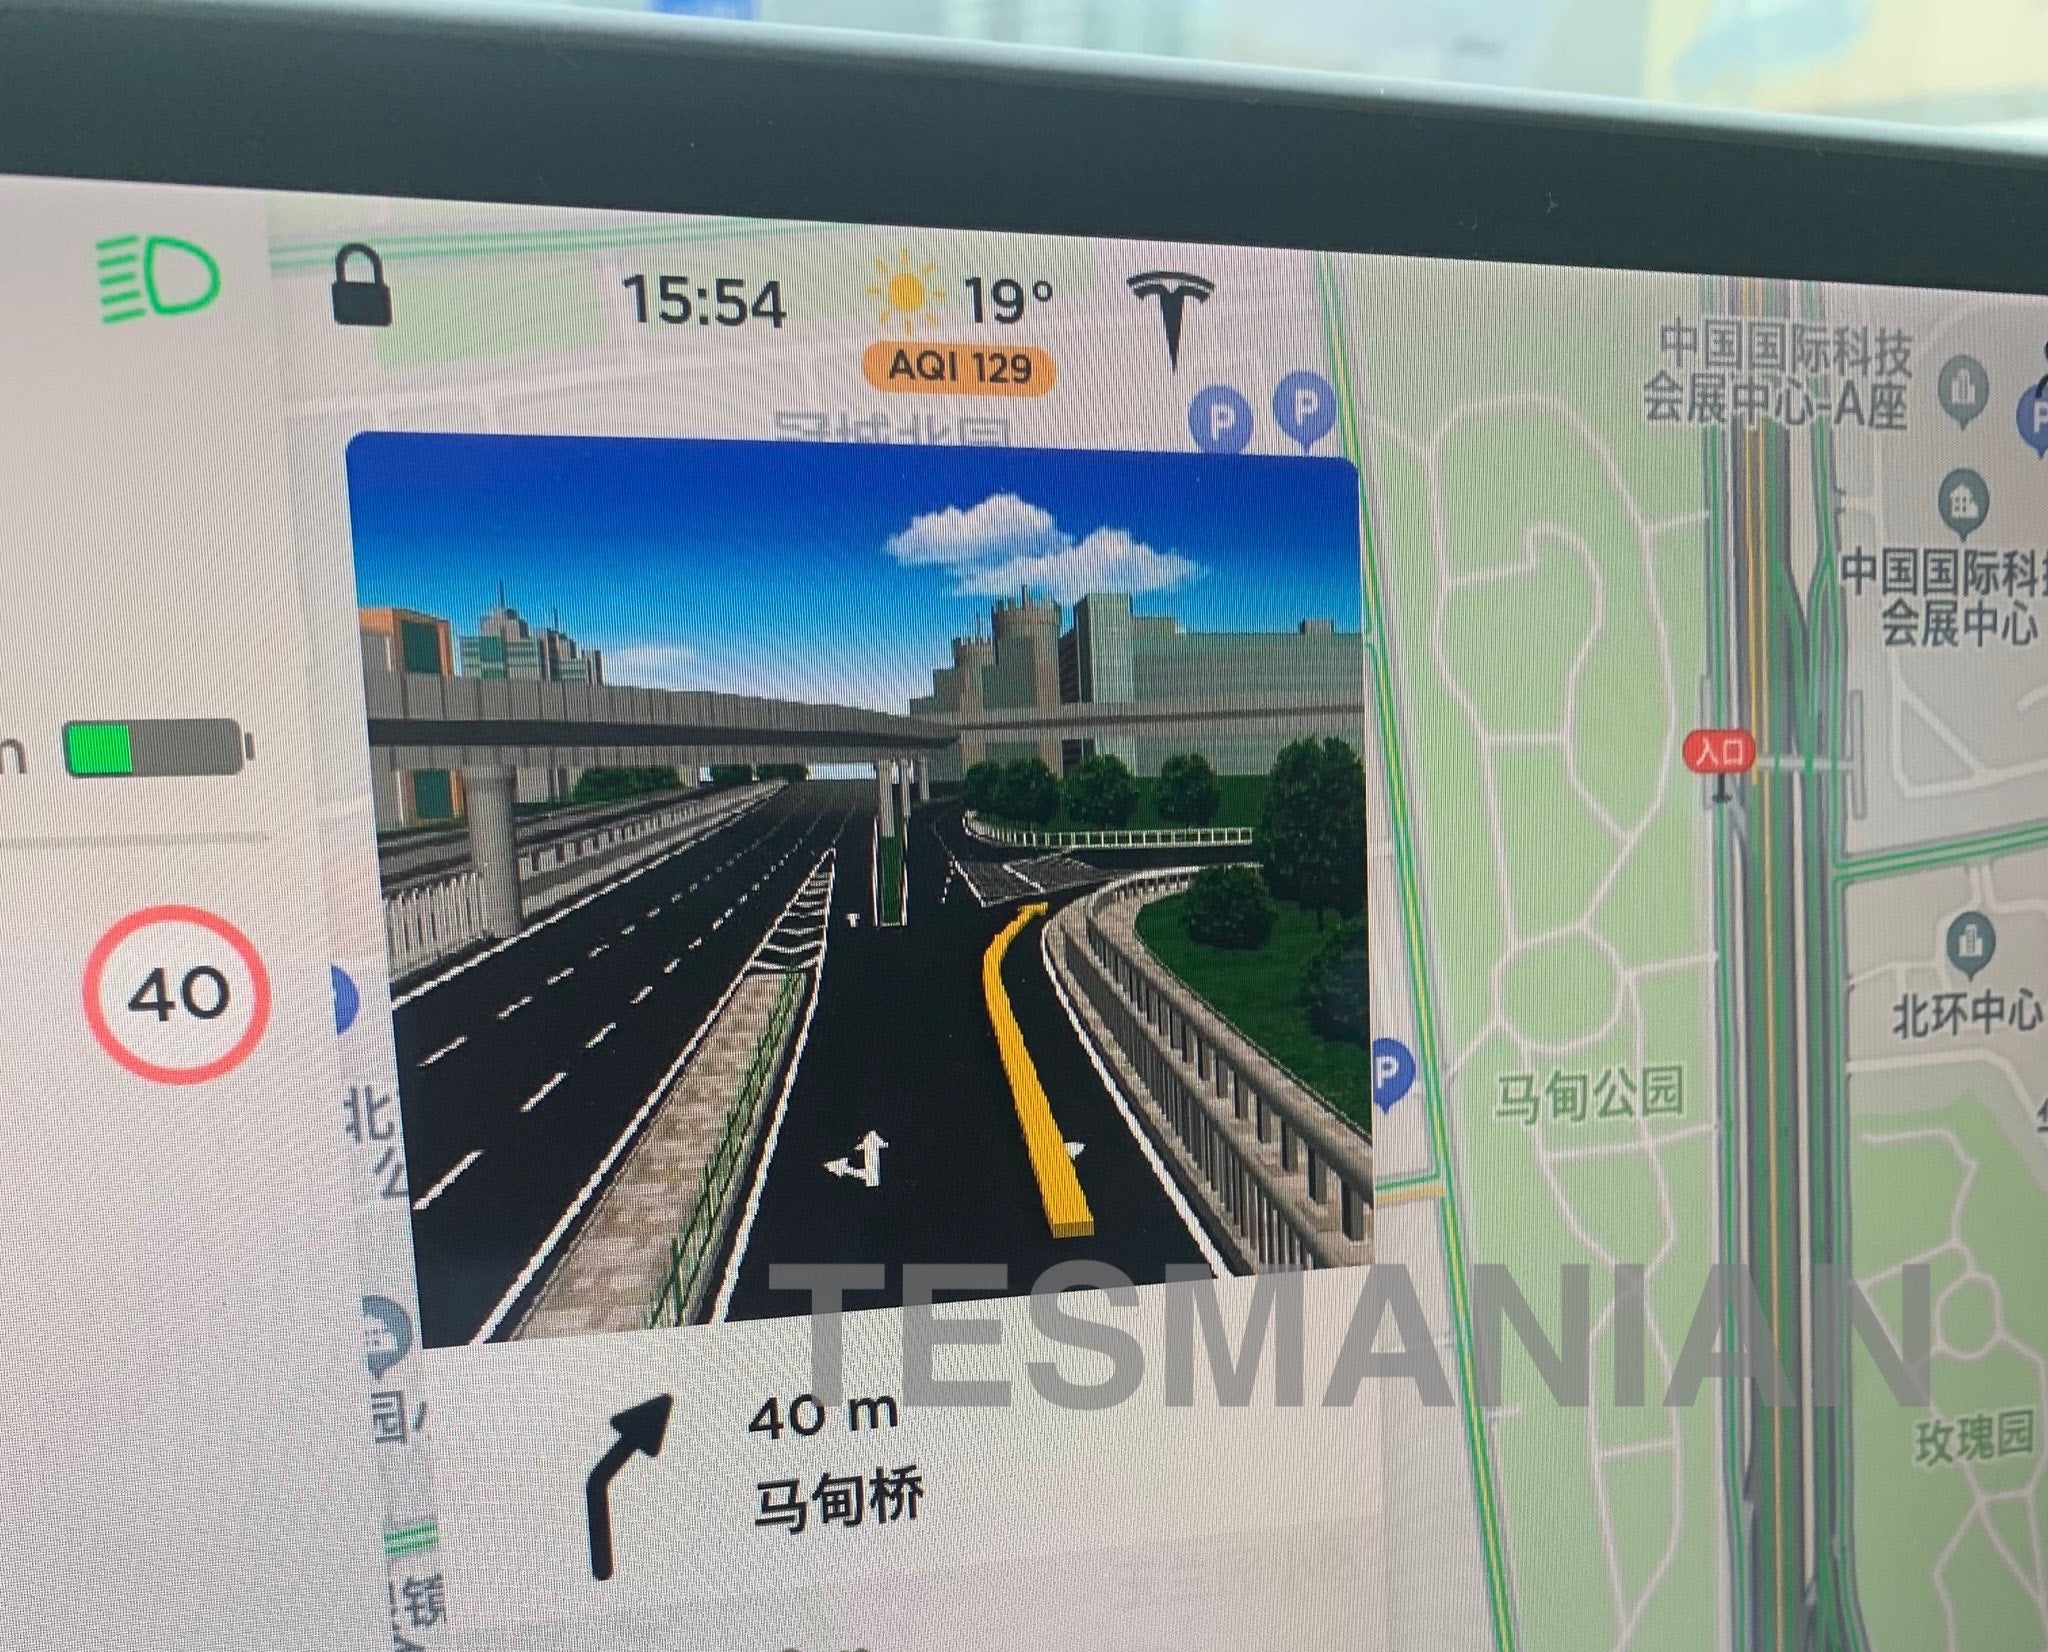 Tesla Autopilot in China Gets Enlarged Window for Enhanced Navigation